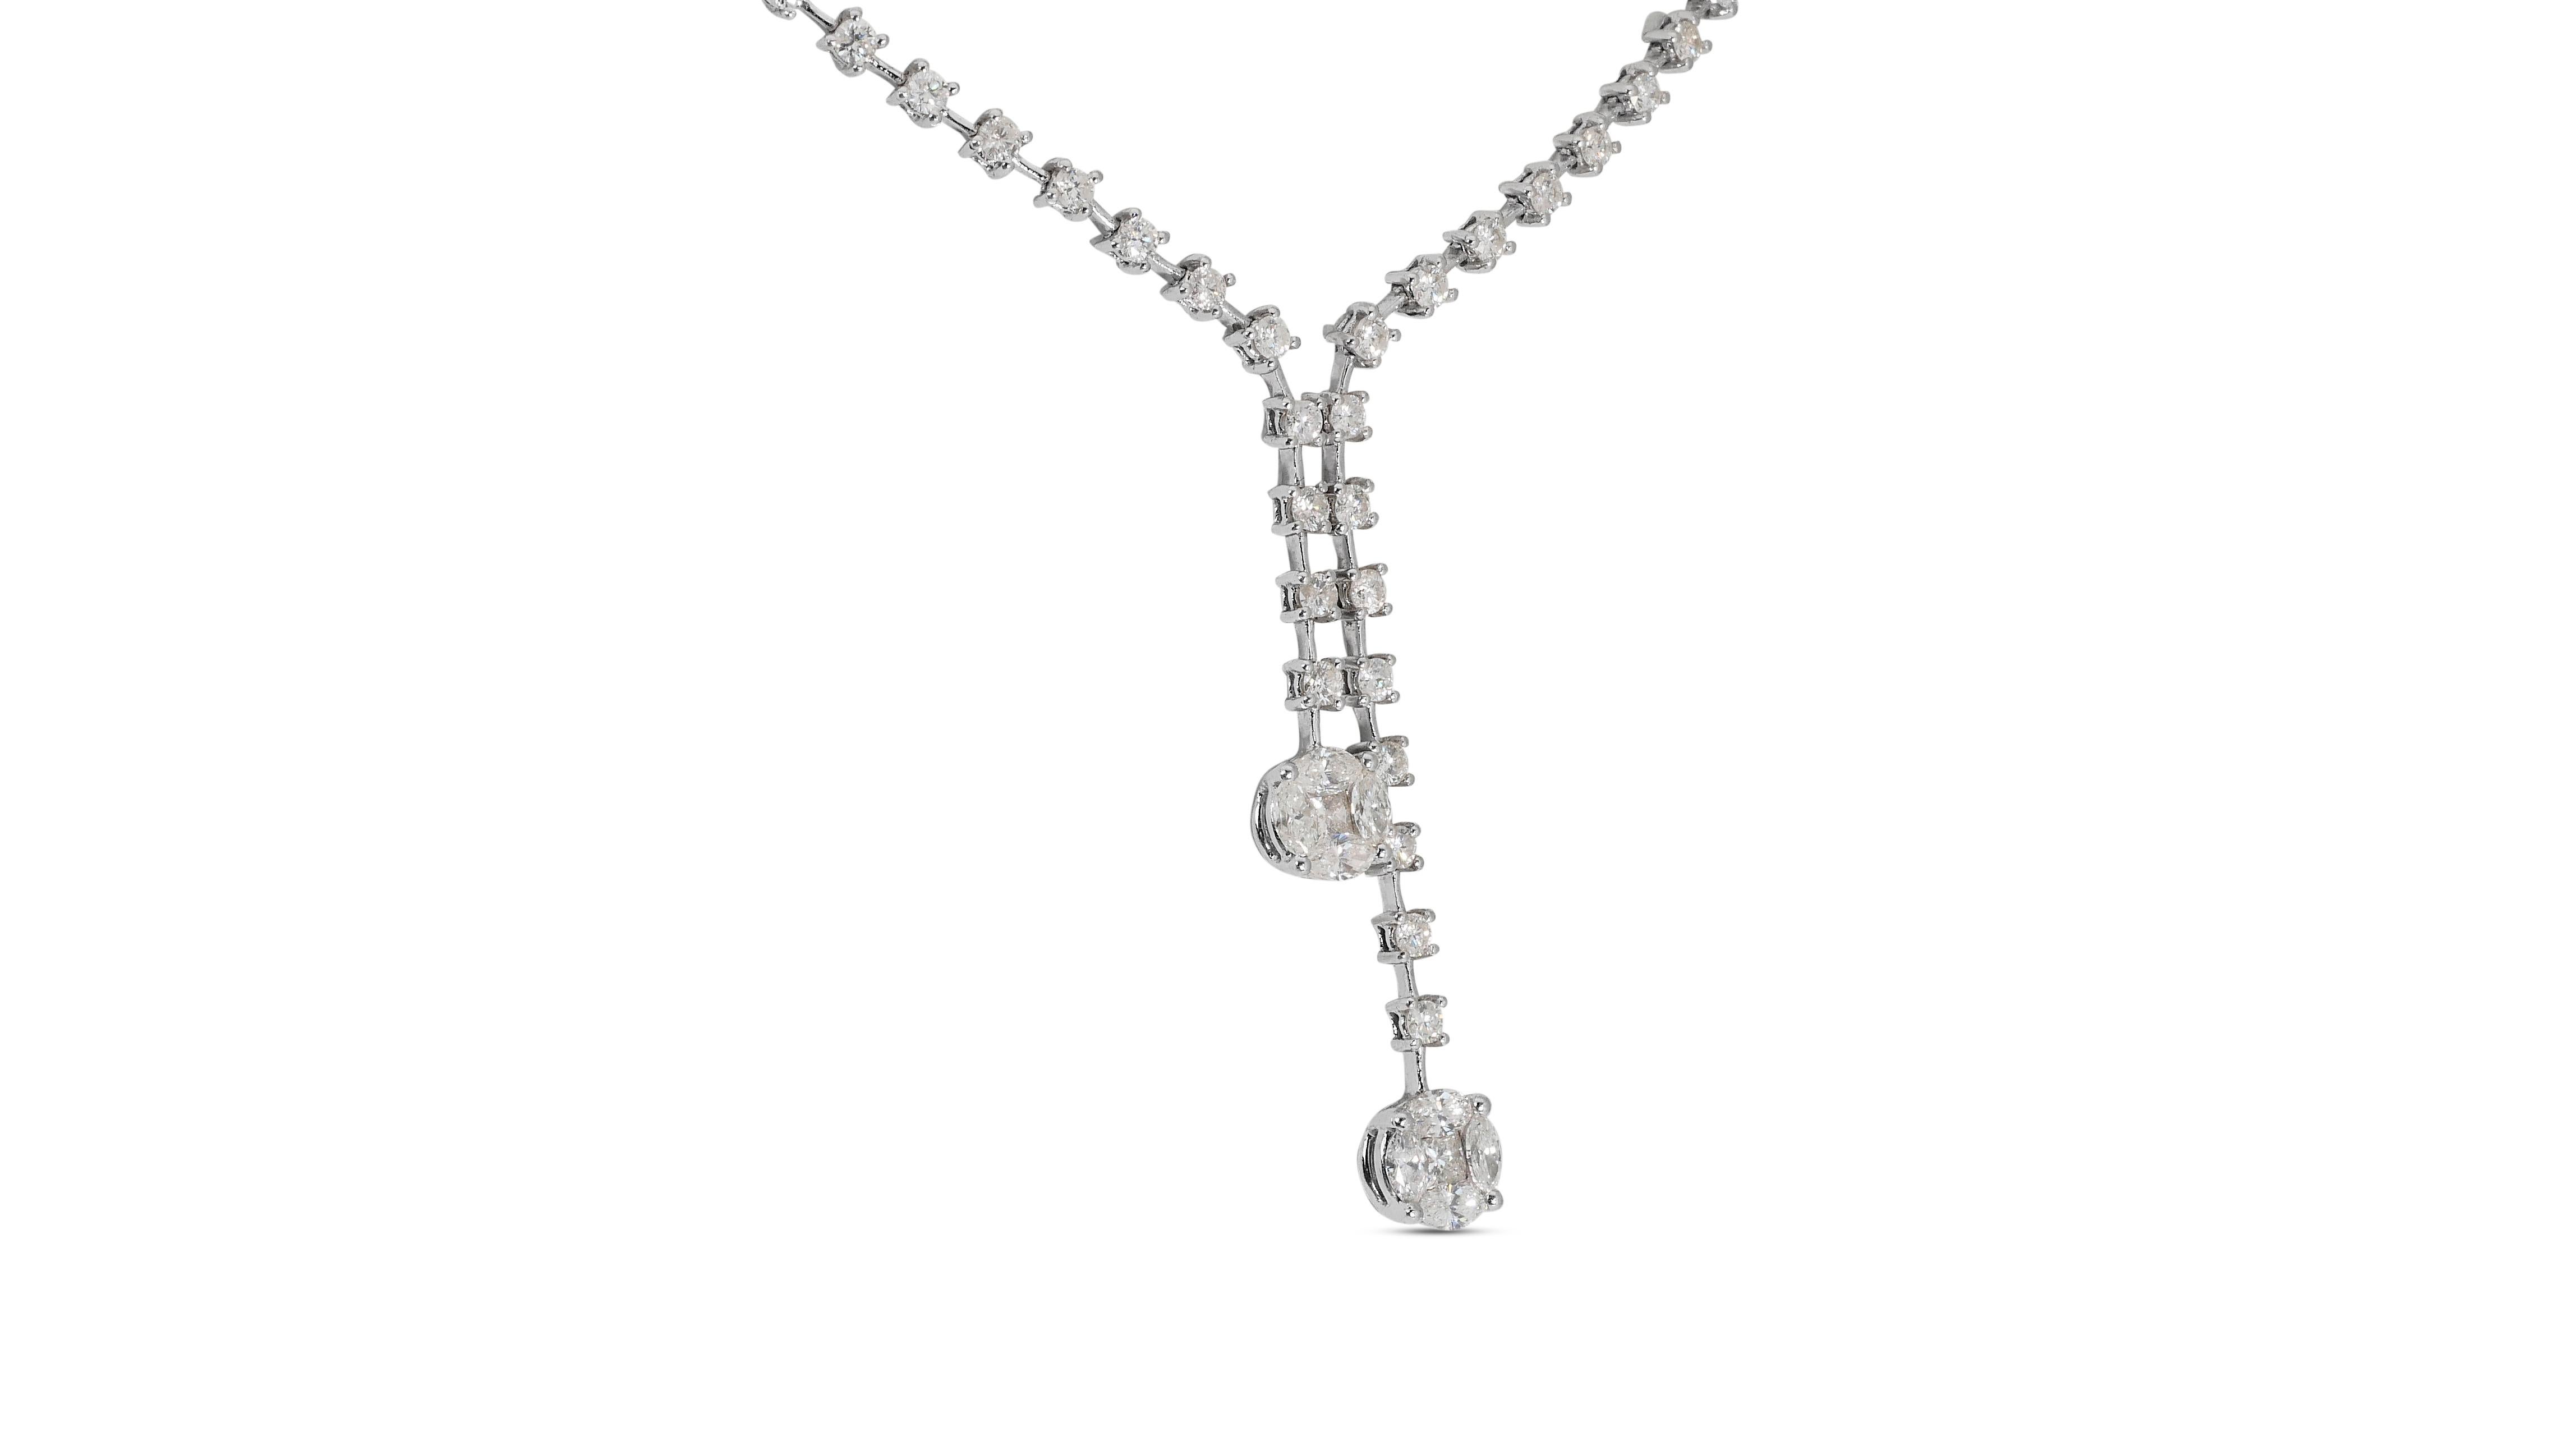 Glamorous 18k White Gold Drop Necklace w/ 5.06ct Natural Diamonds IGI Cert For Sale 1